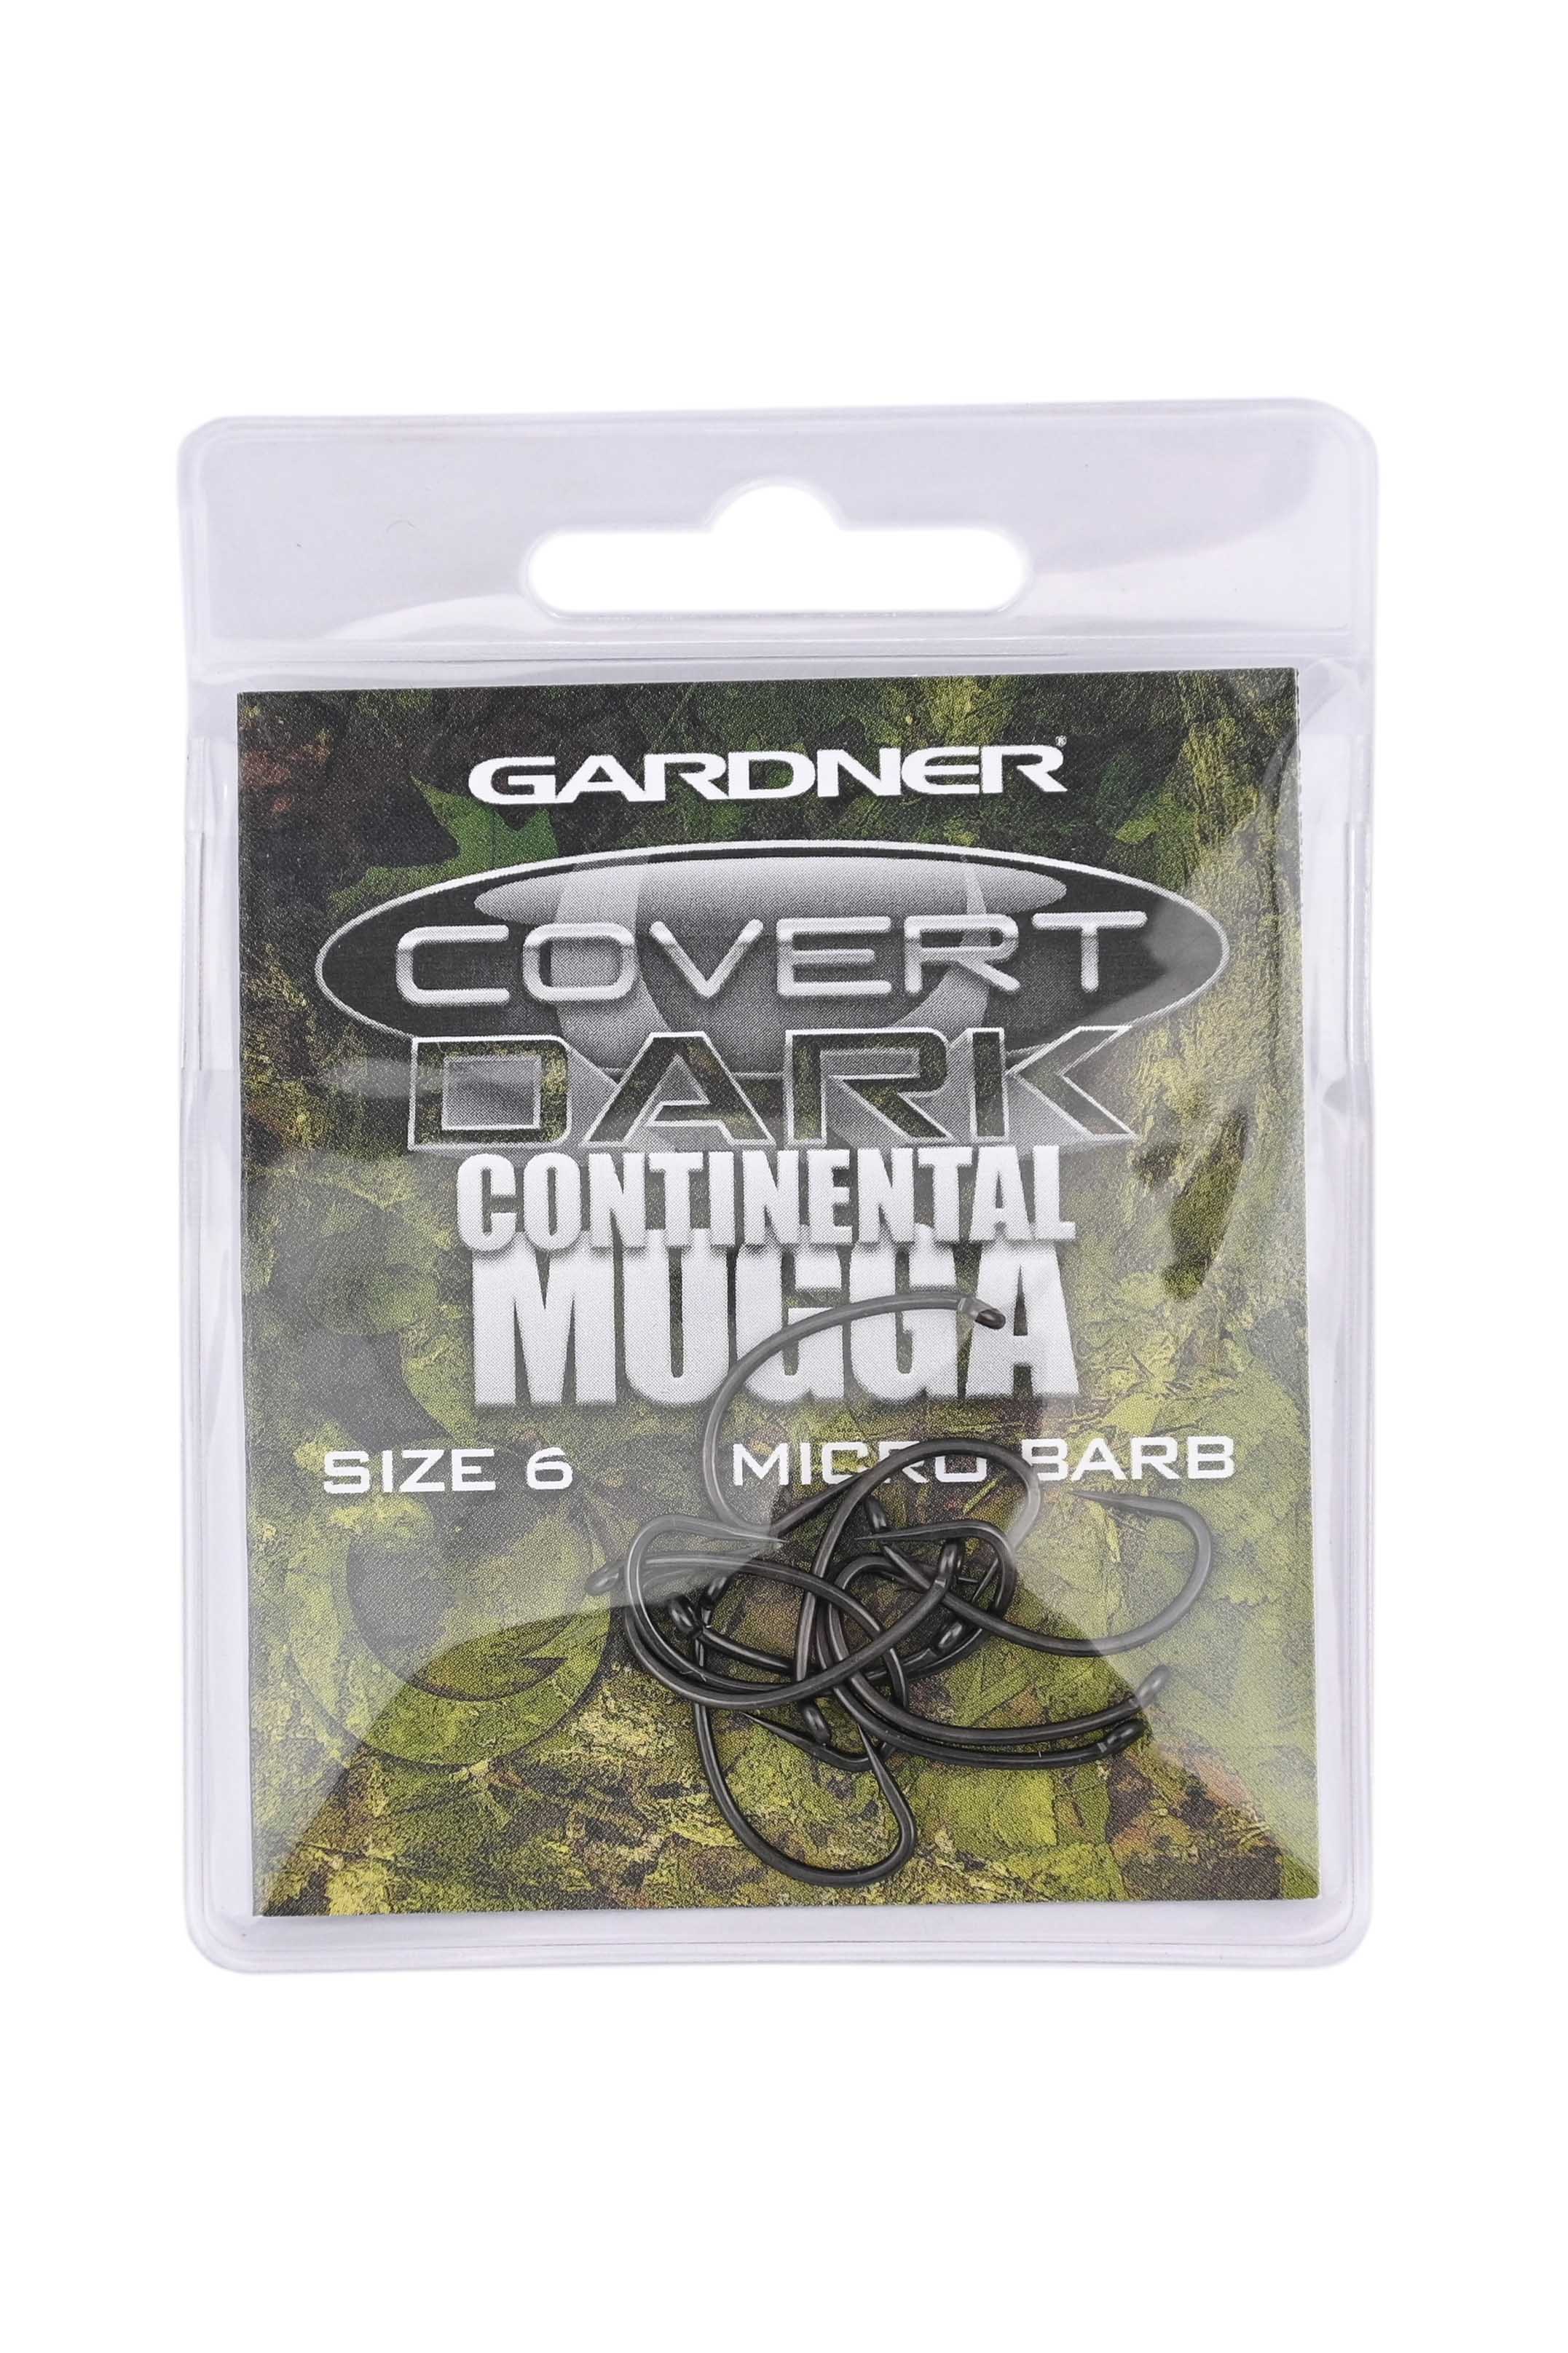 Крючки Gardner Covert dark continental mugga barbed №6 - фото 1